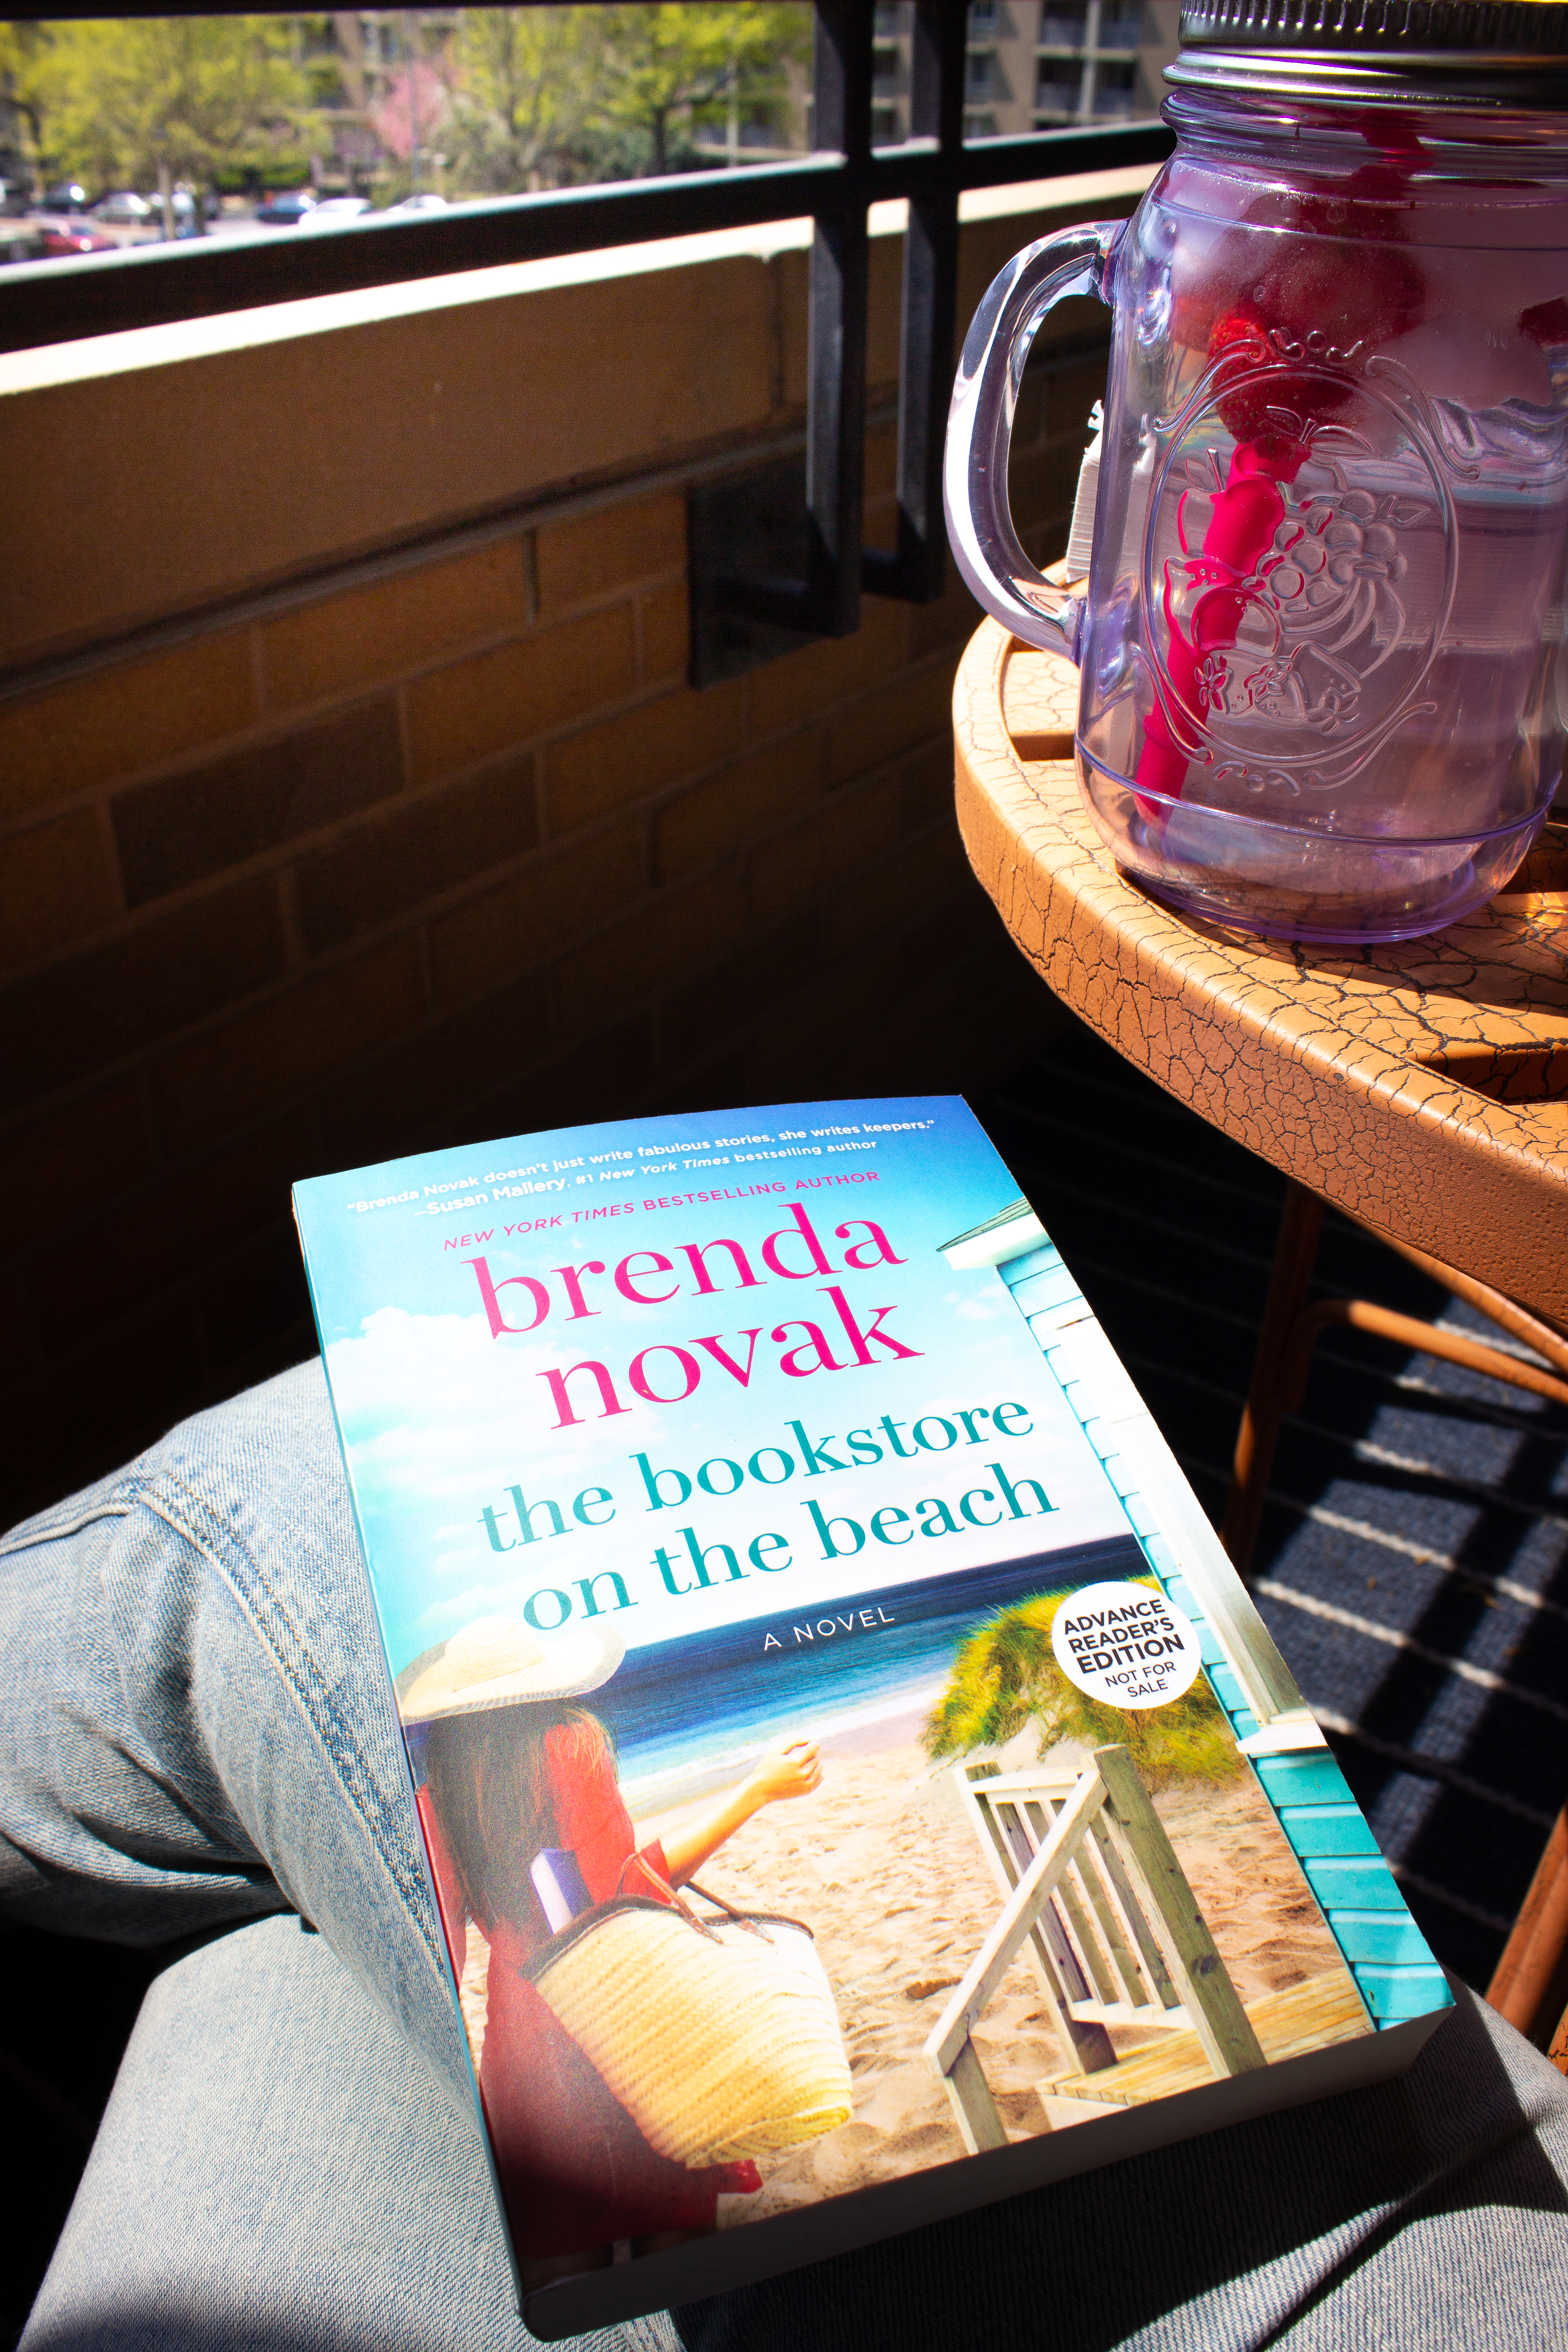 THE BOOKSTORE ON THE BEACH by Brenda Novak